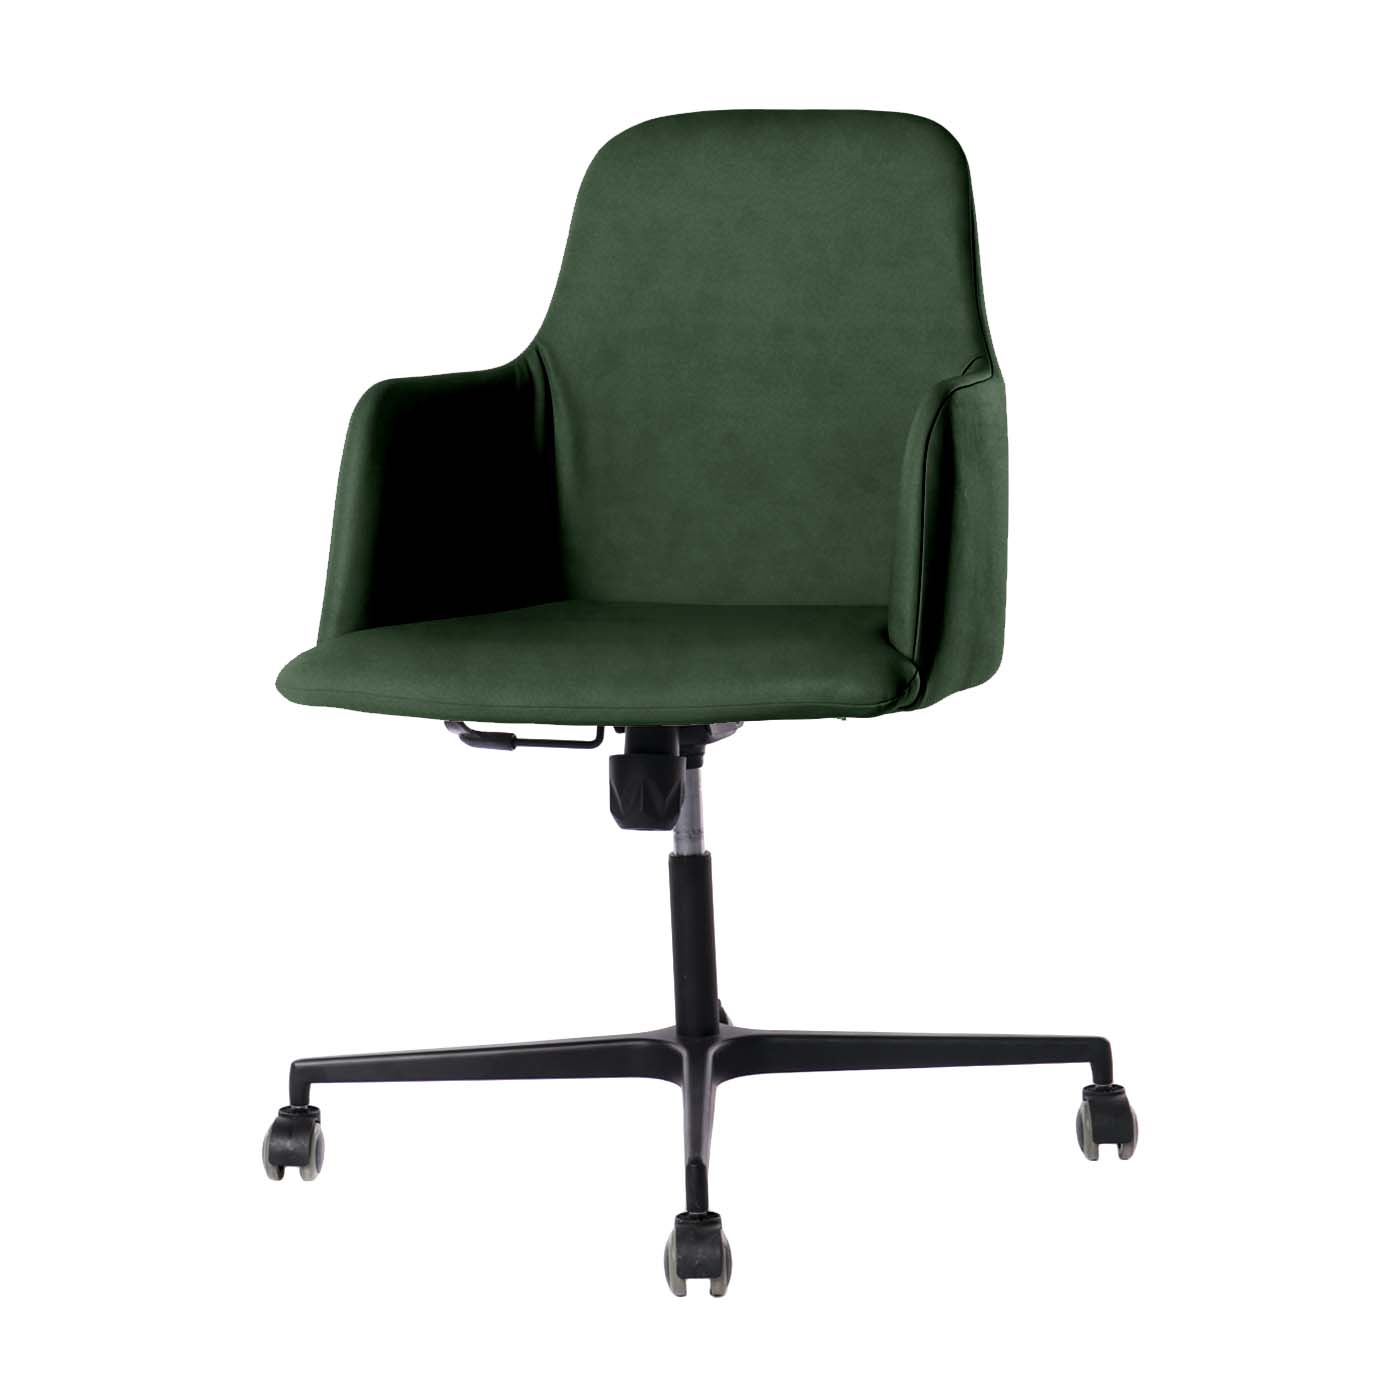 St. Pauli Textured Green Work Chair